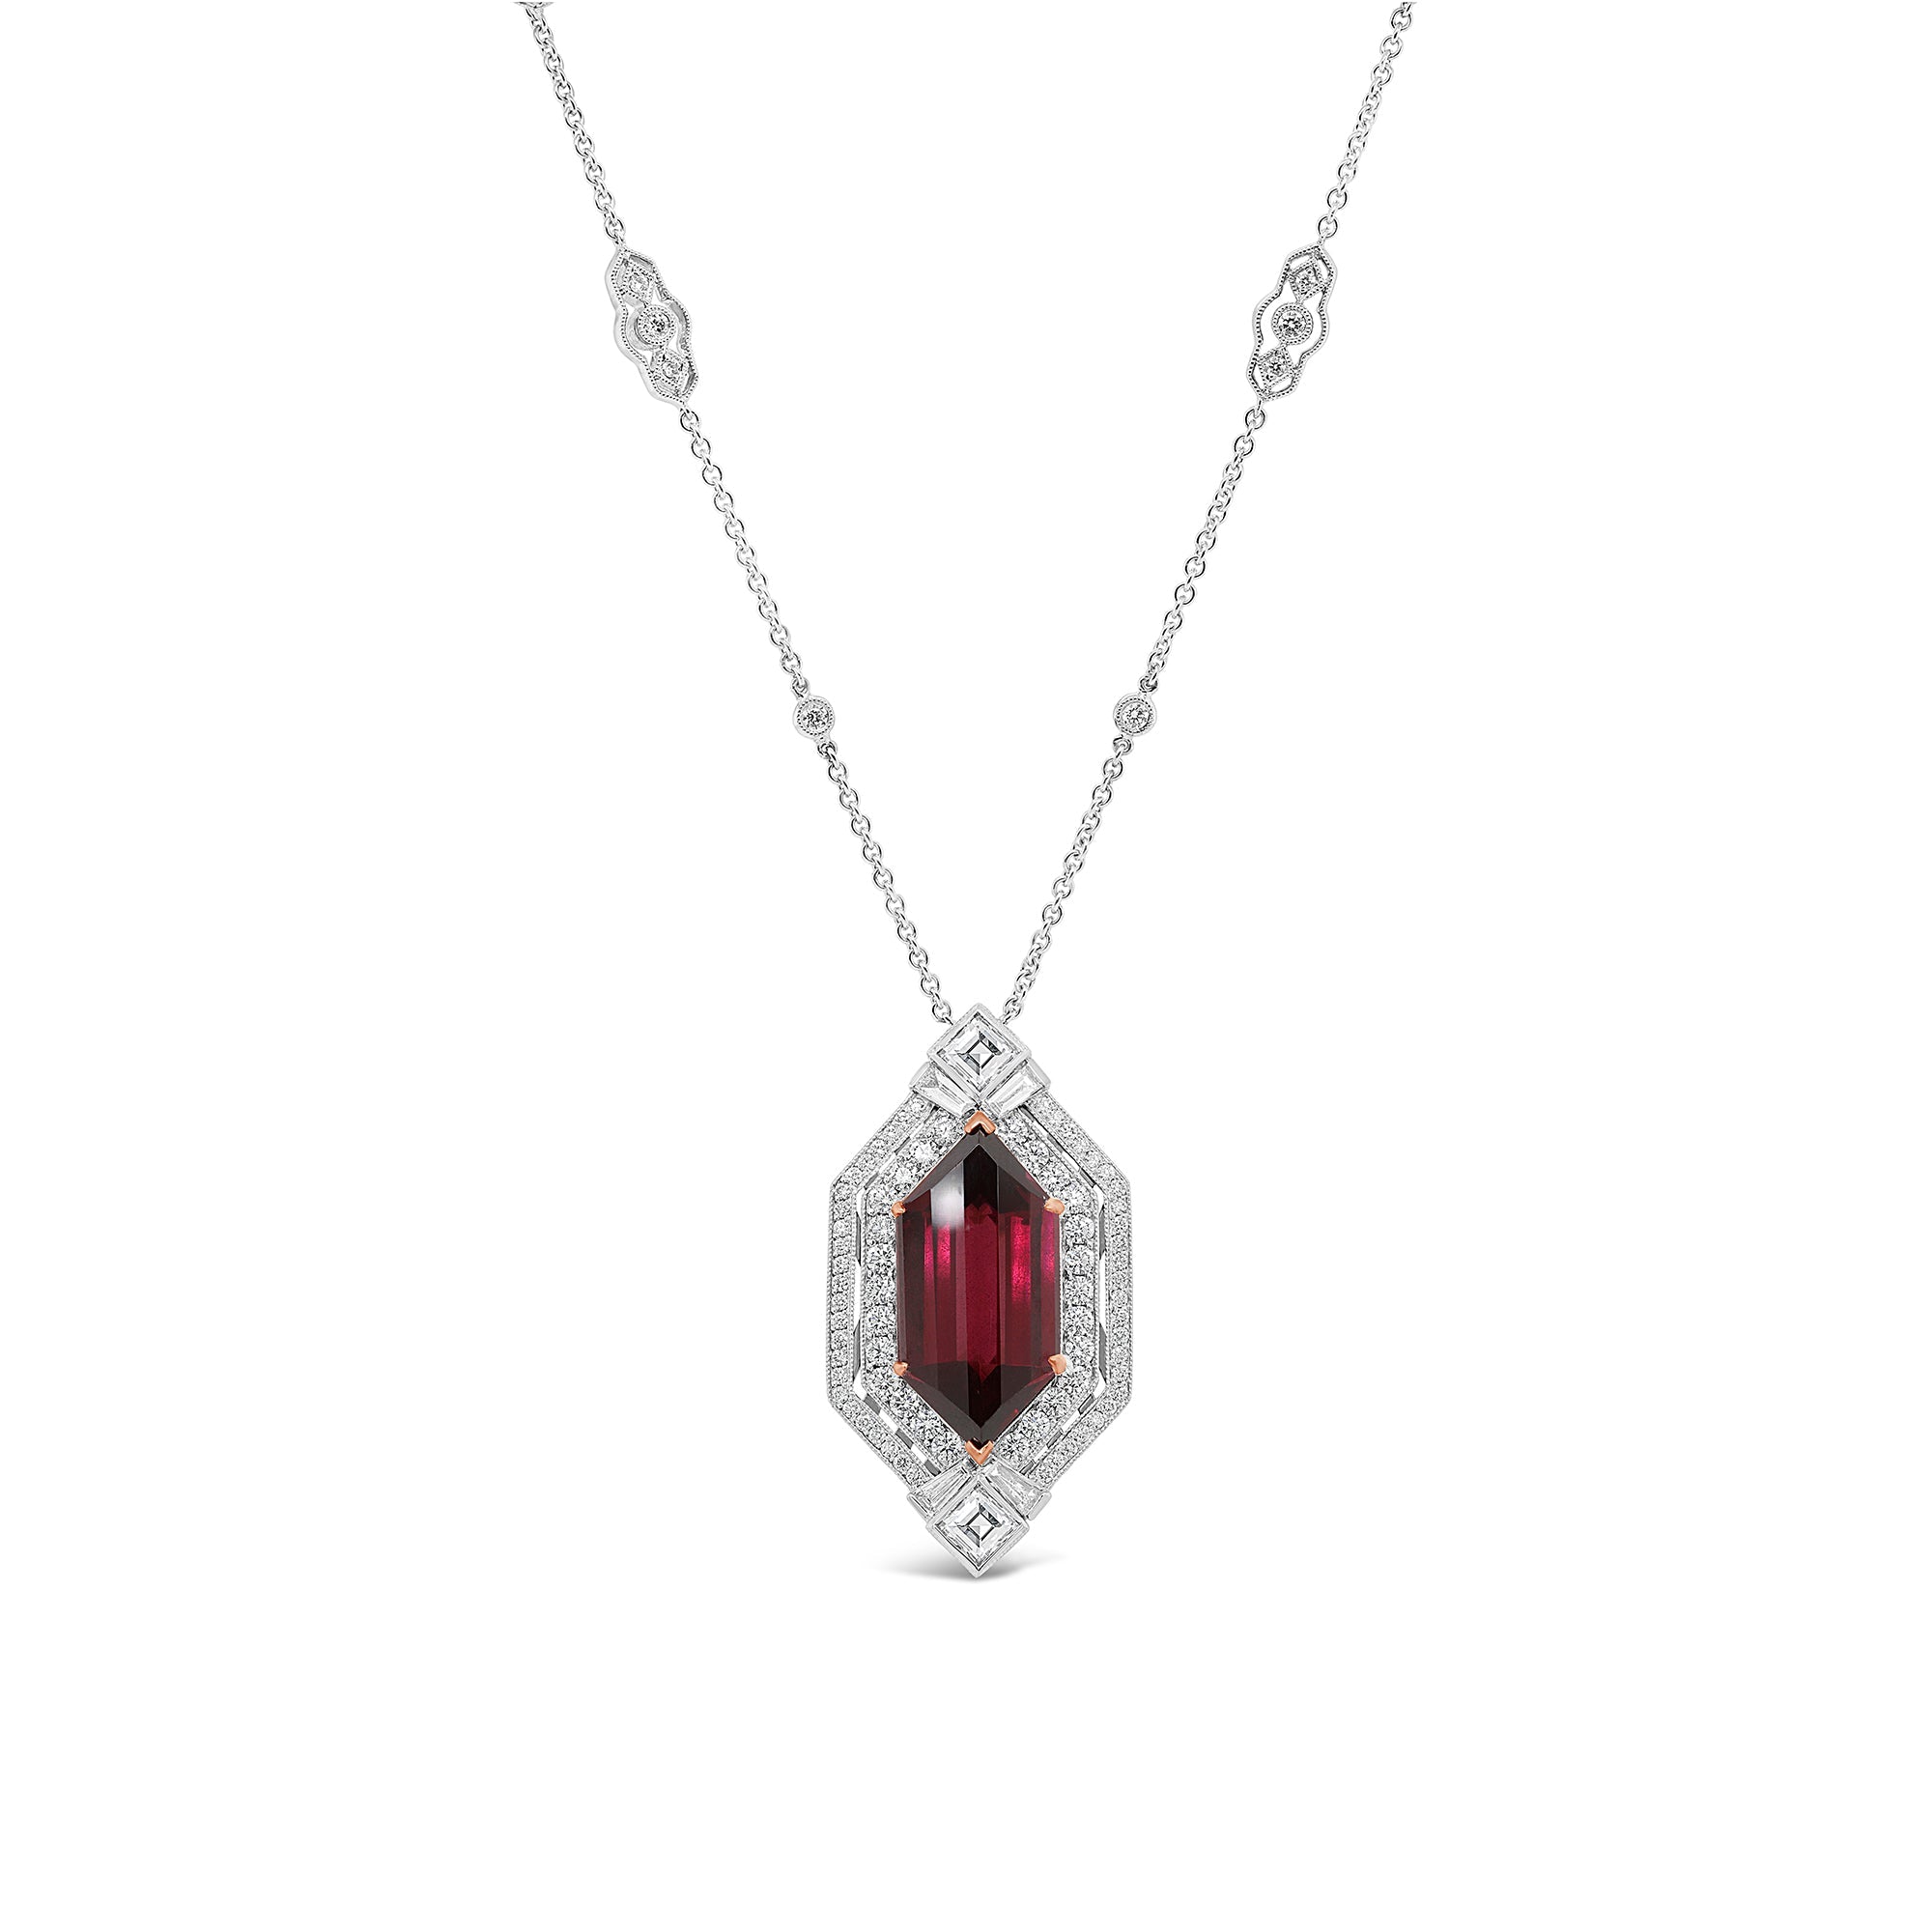 Garnet and diamond necklace